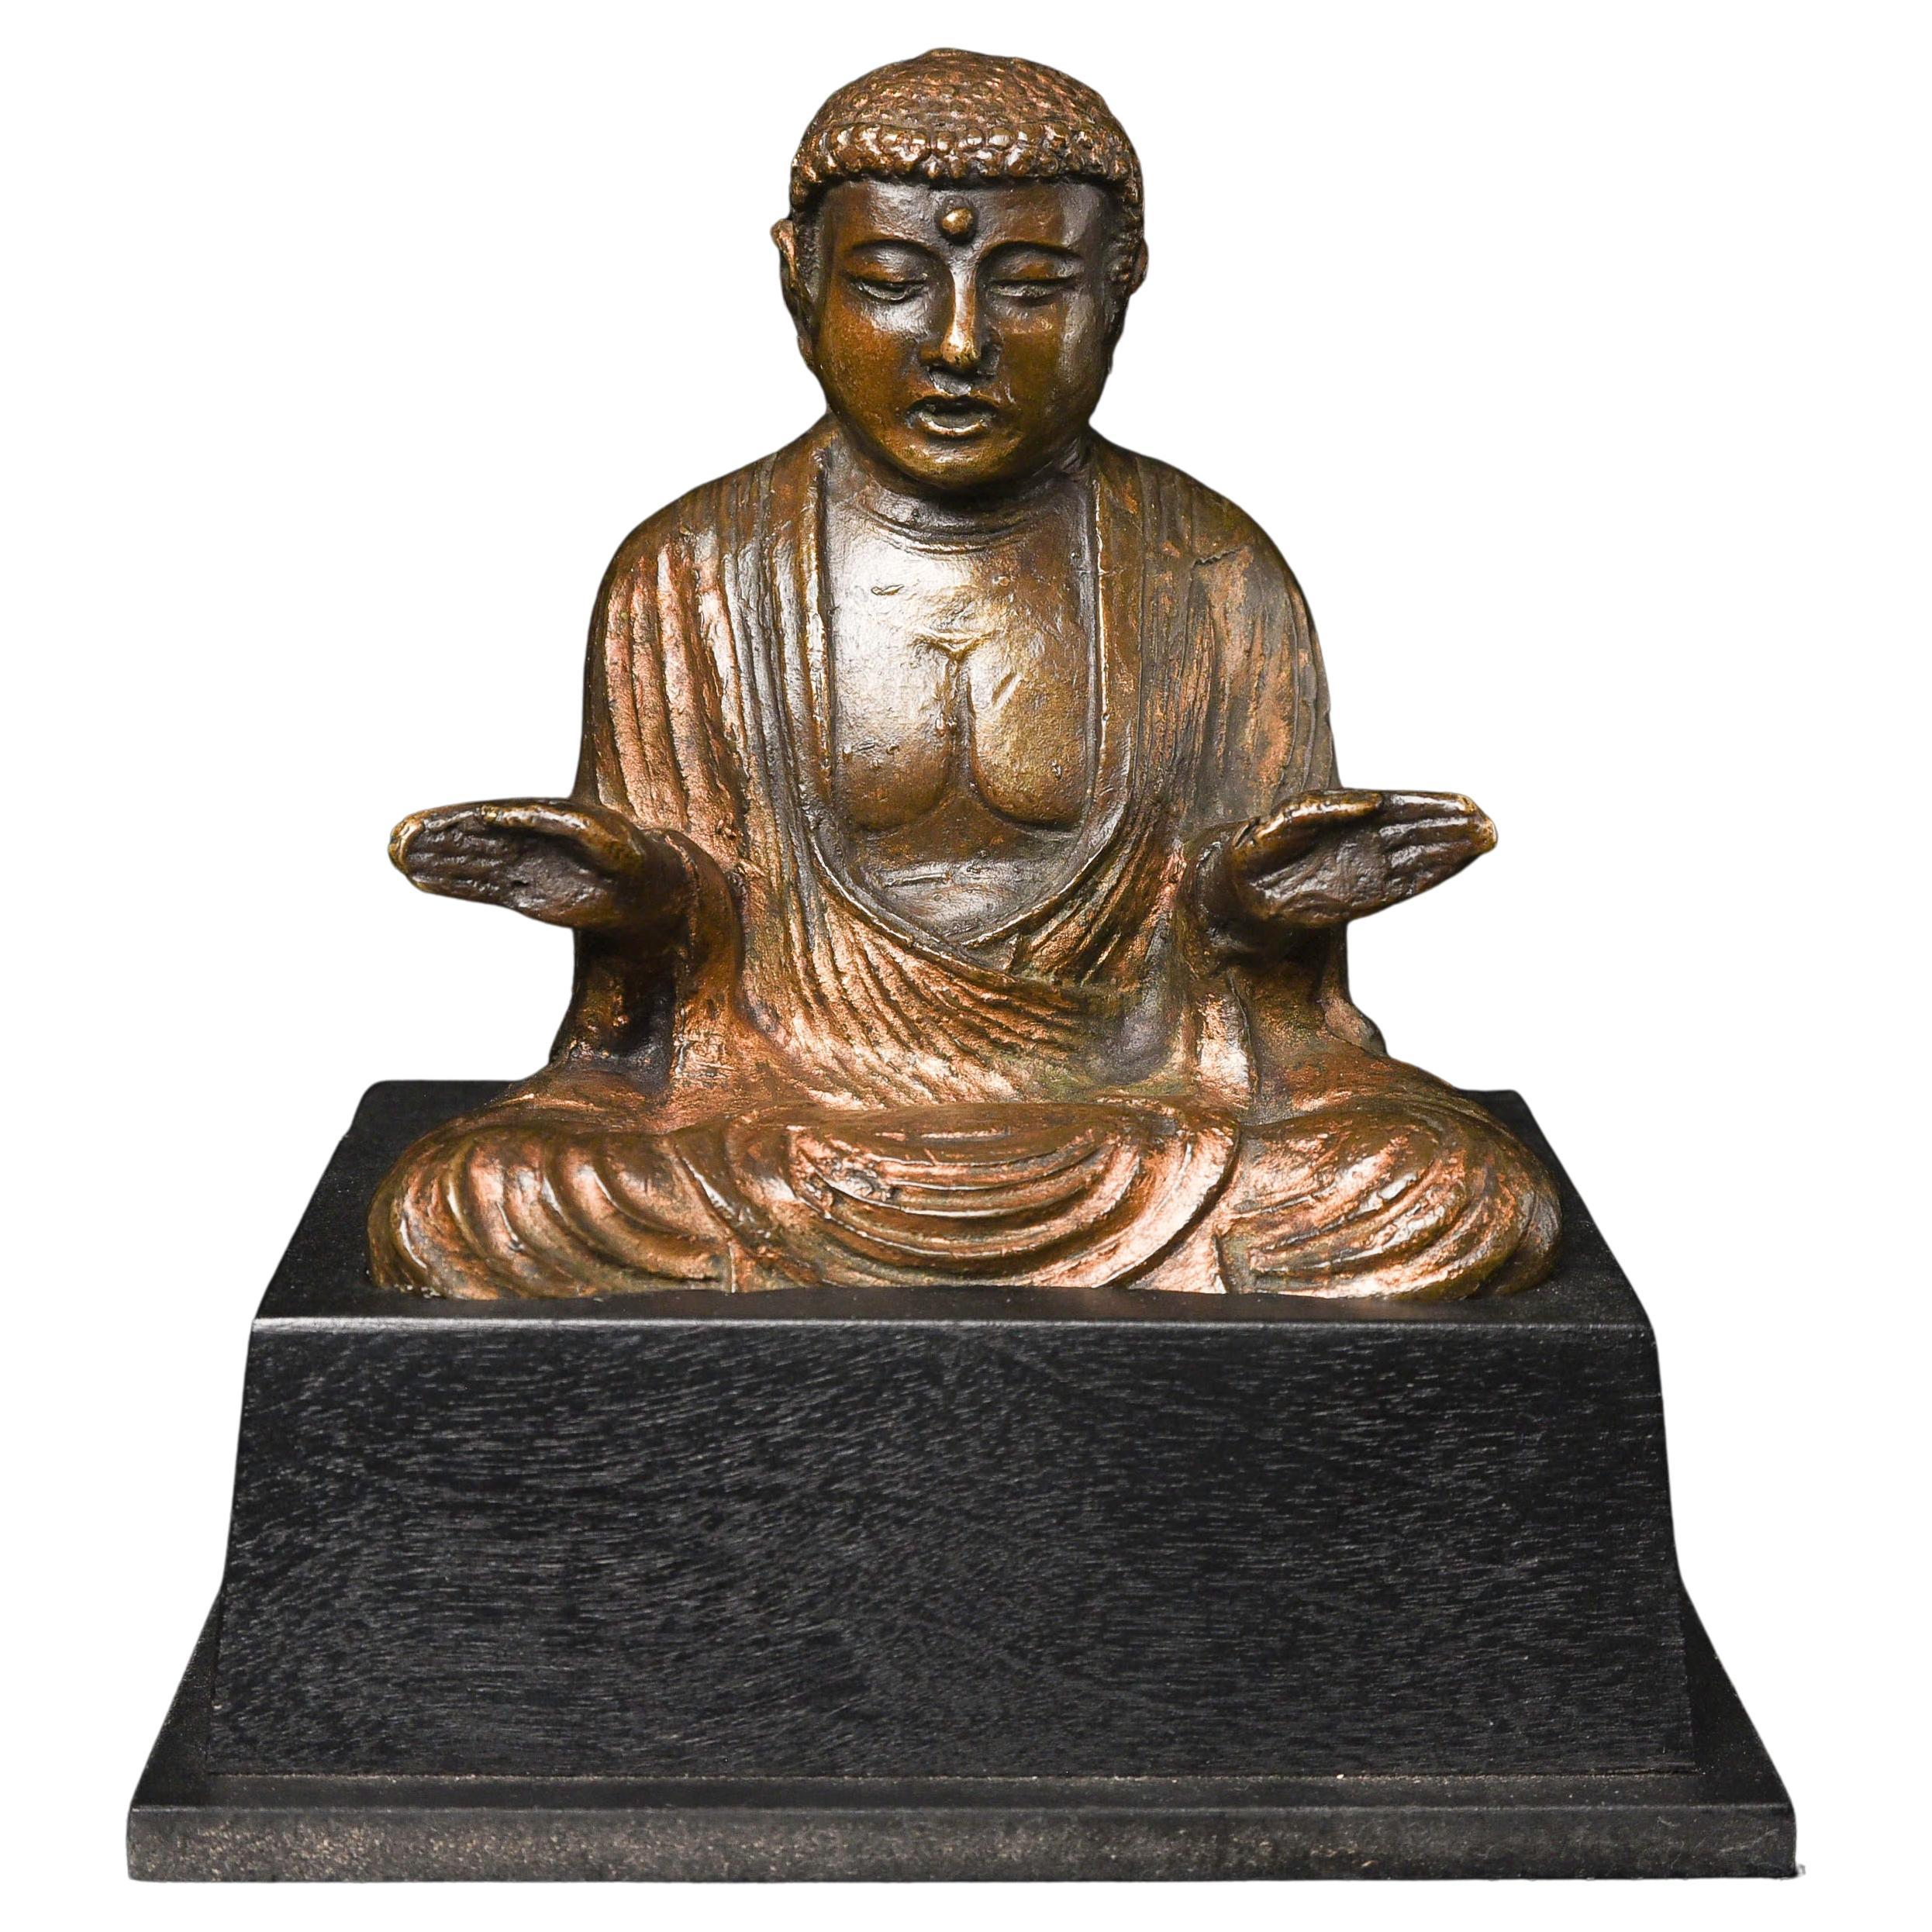 Antique Korean or Japanese Buddha - 9719